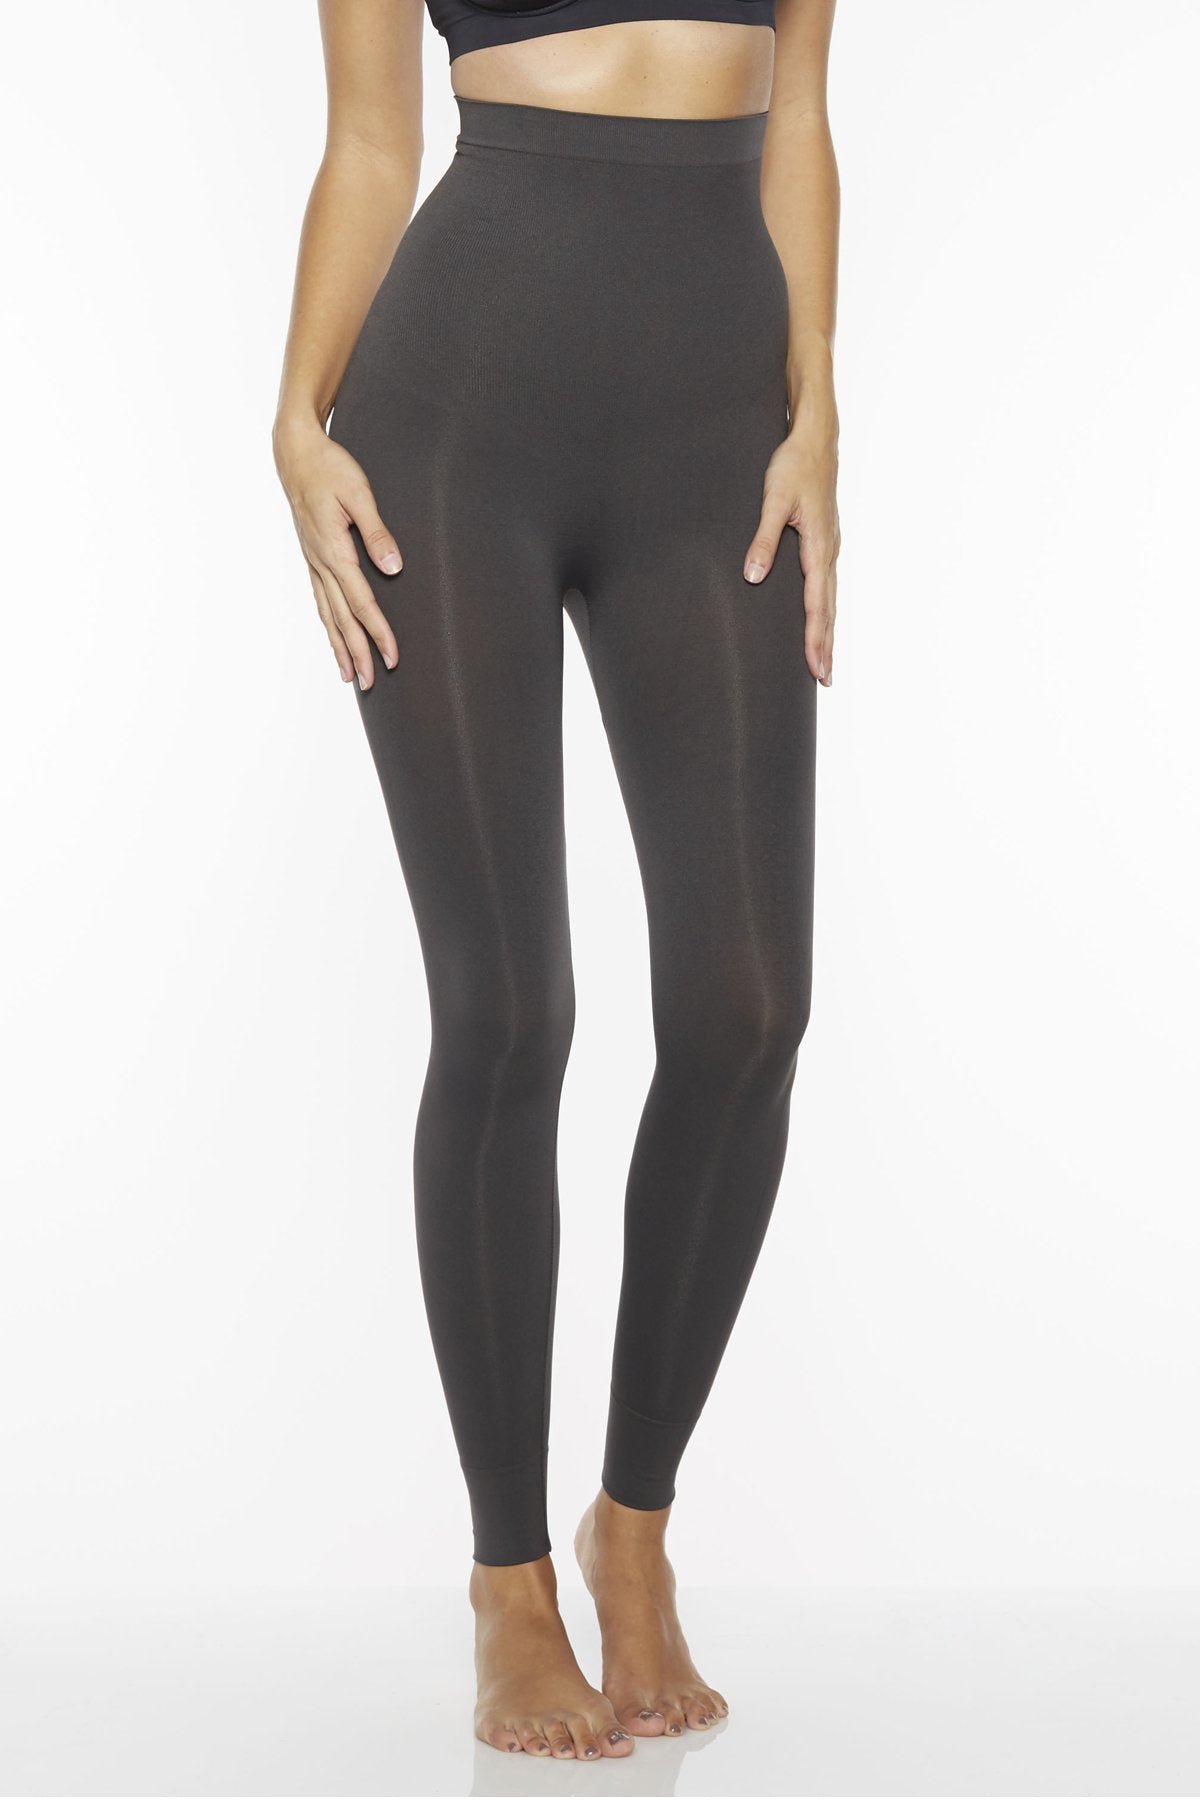 Rhonda Shear Women's 2-pack Fleece-Lined Leggings Black/Chocolate XL/1X Size